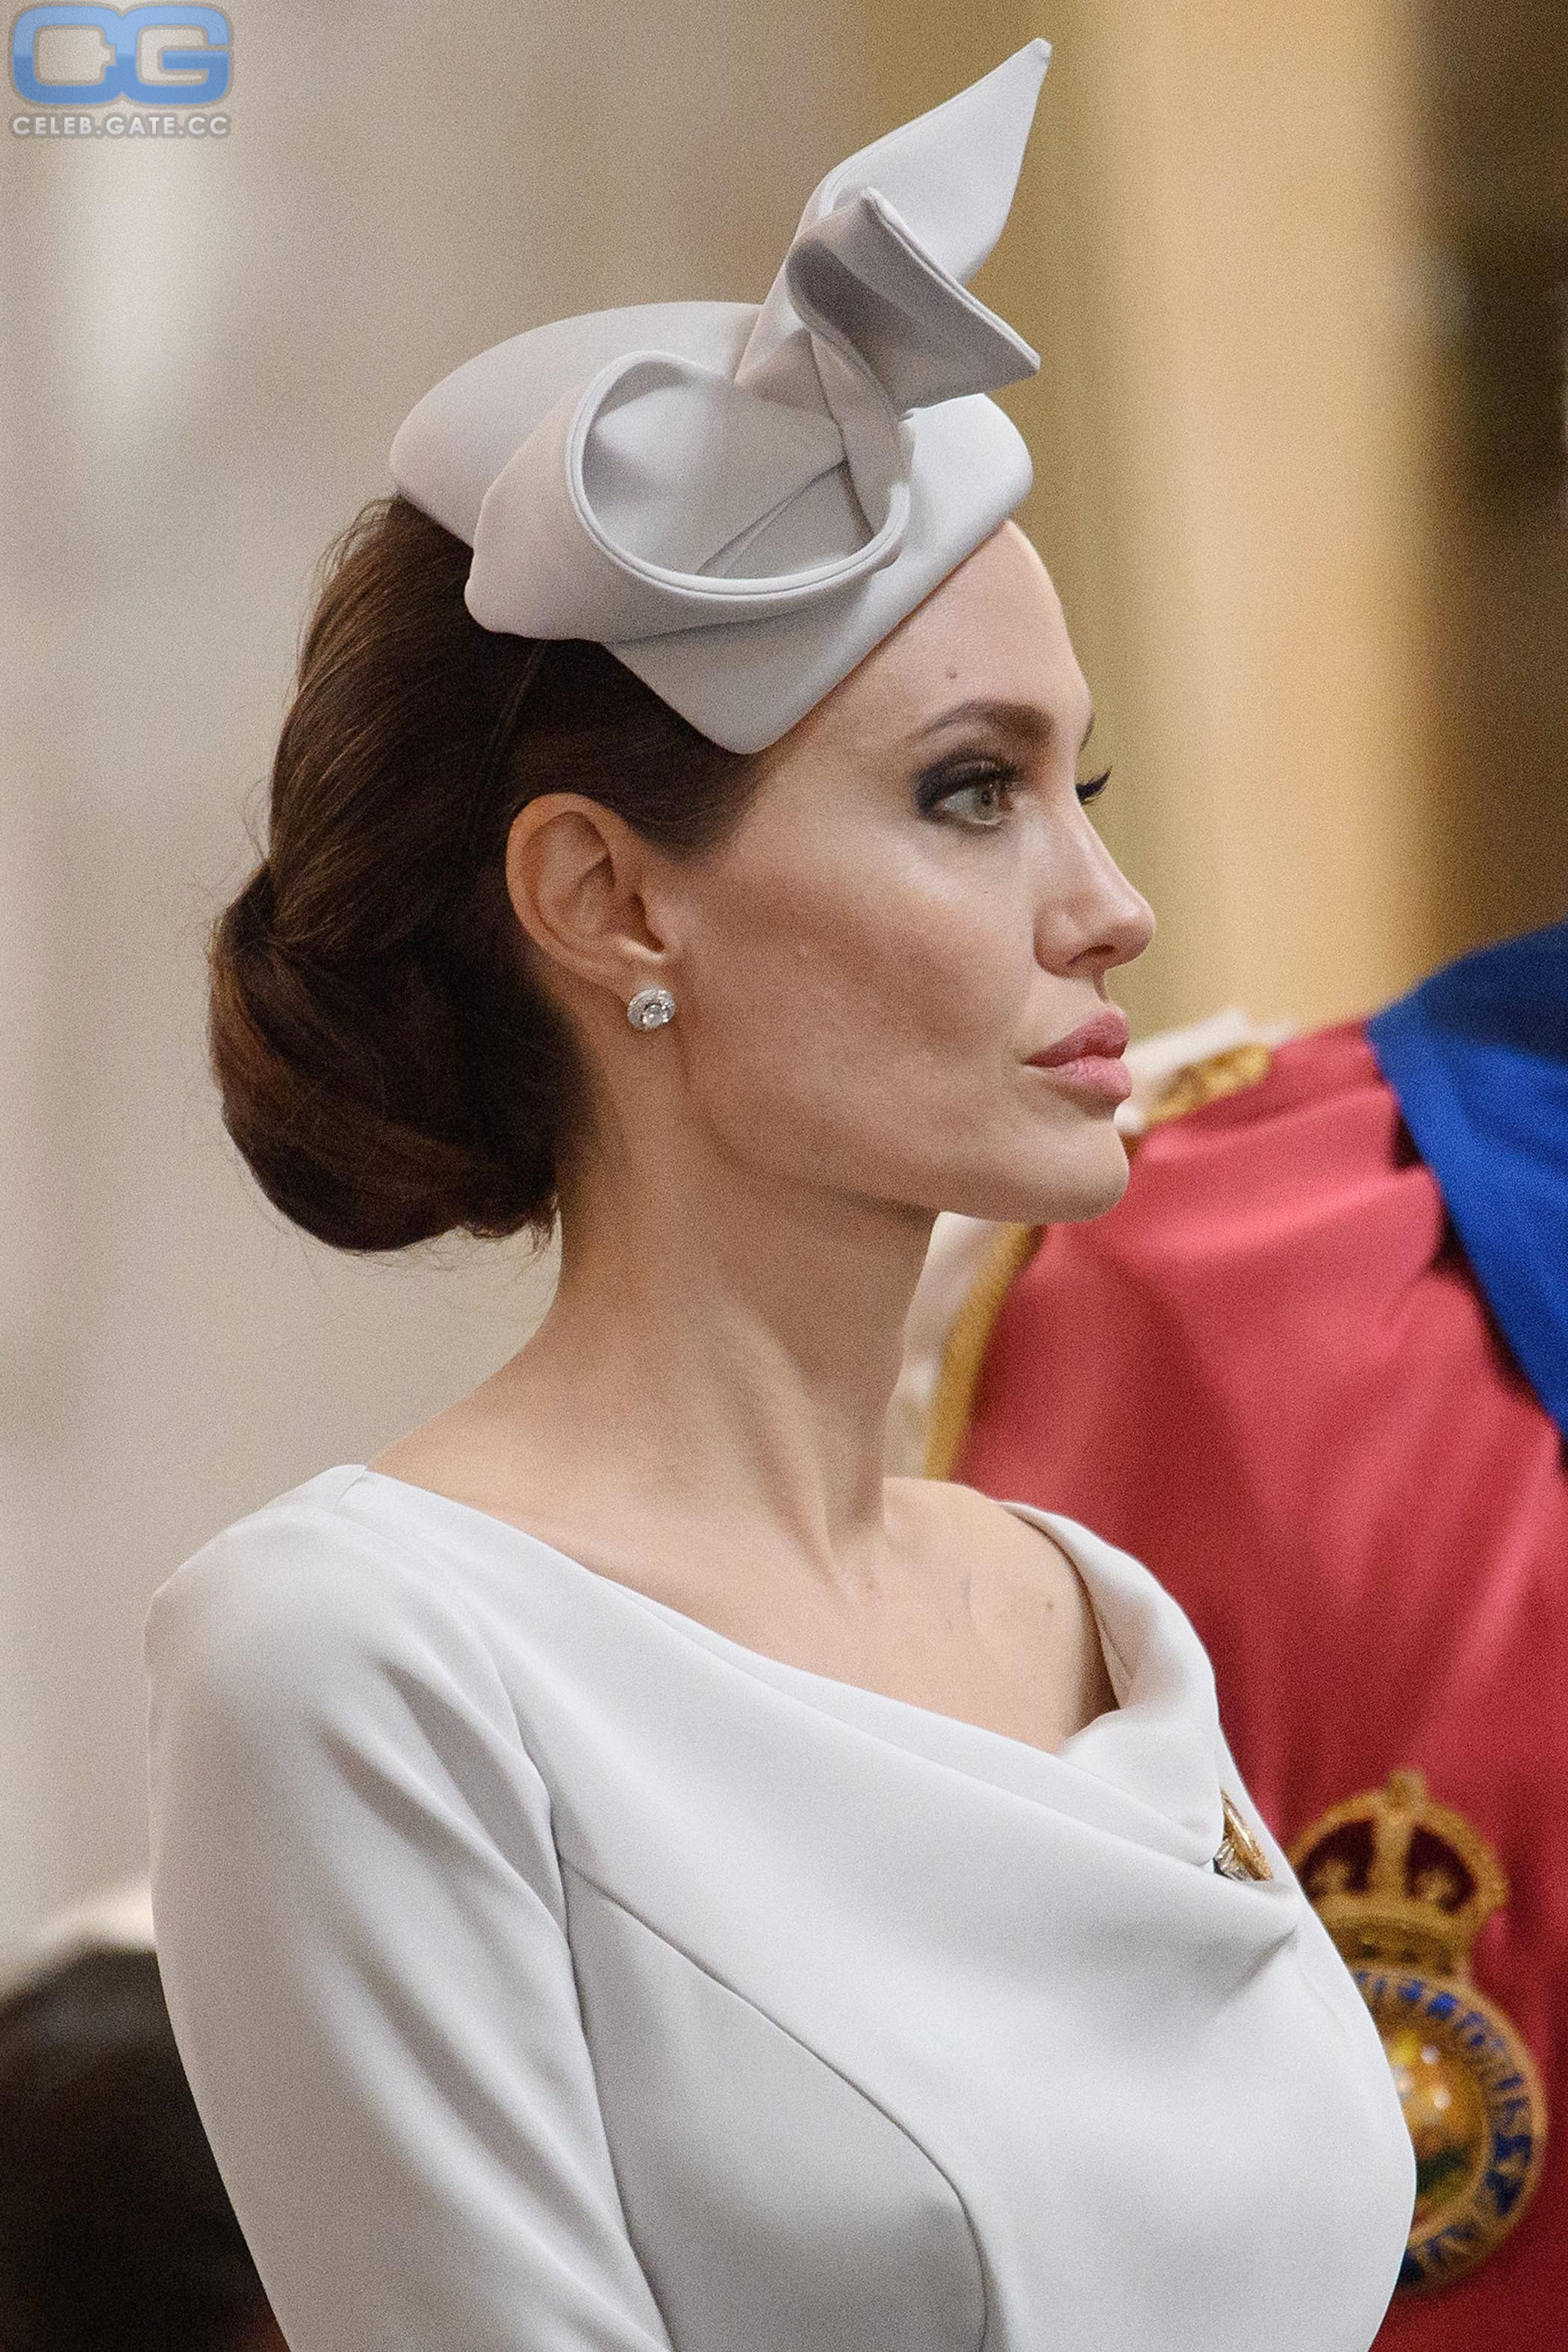 Angelina Jolie hot